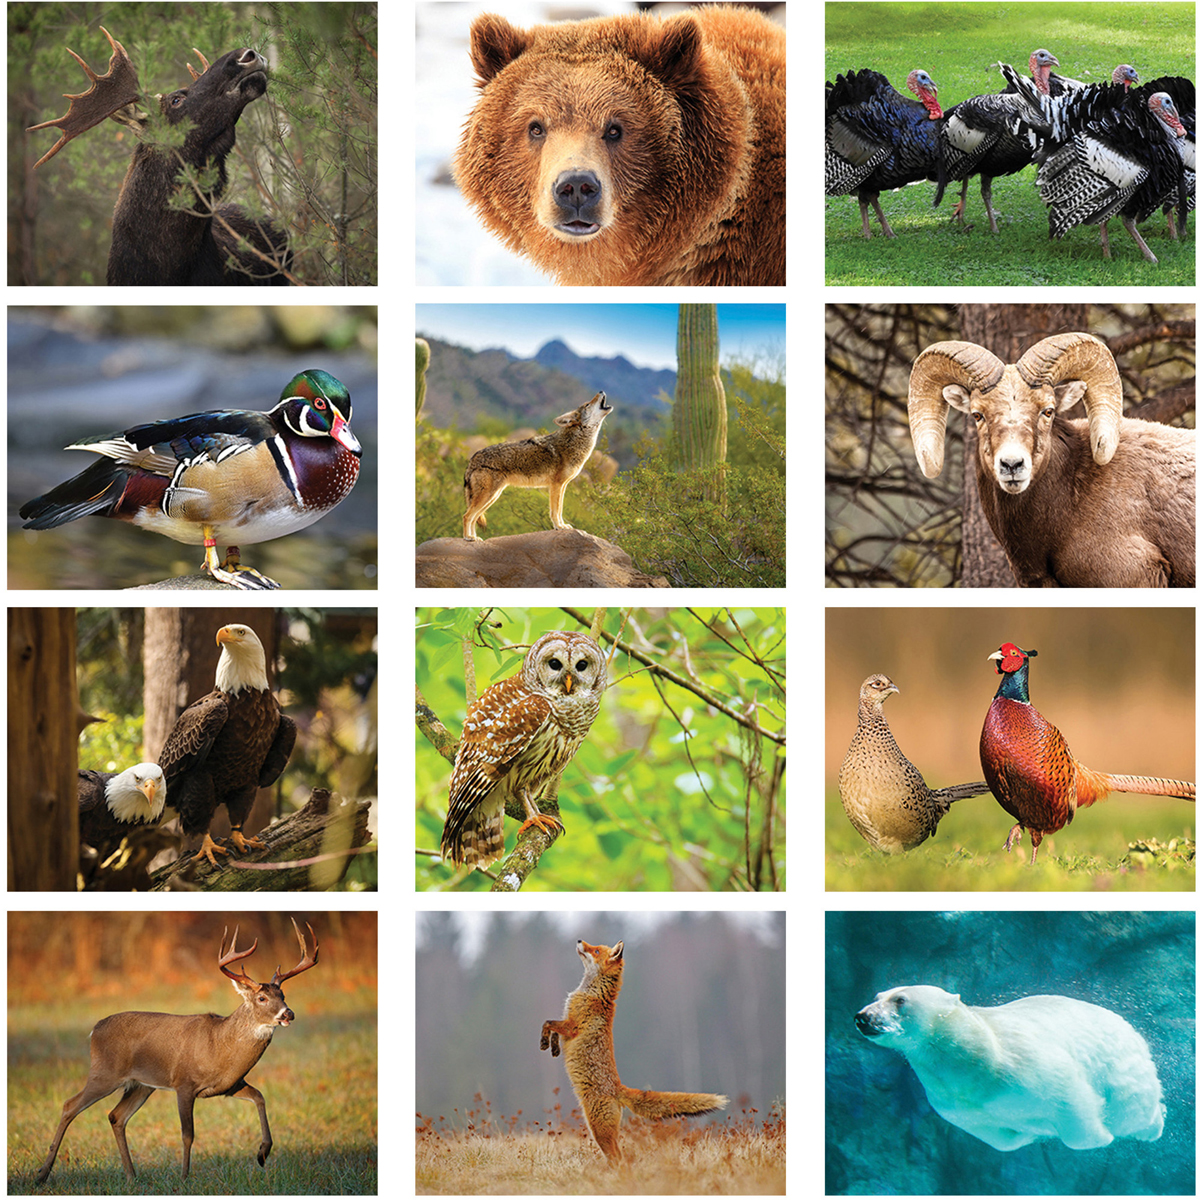 2024 Wildlife Calendar 101/2" x 181/4" Promotional Wildlife Calendars